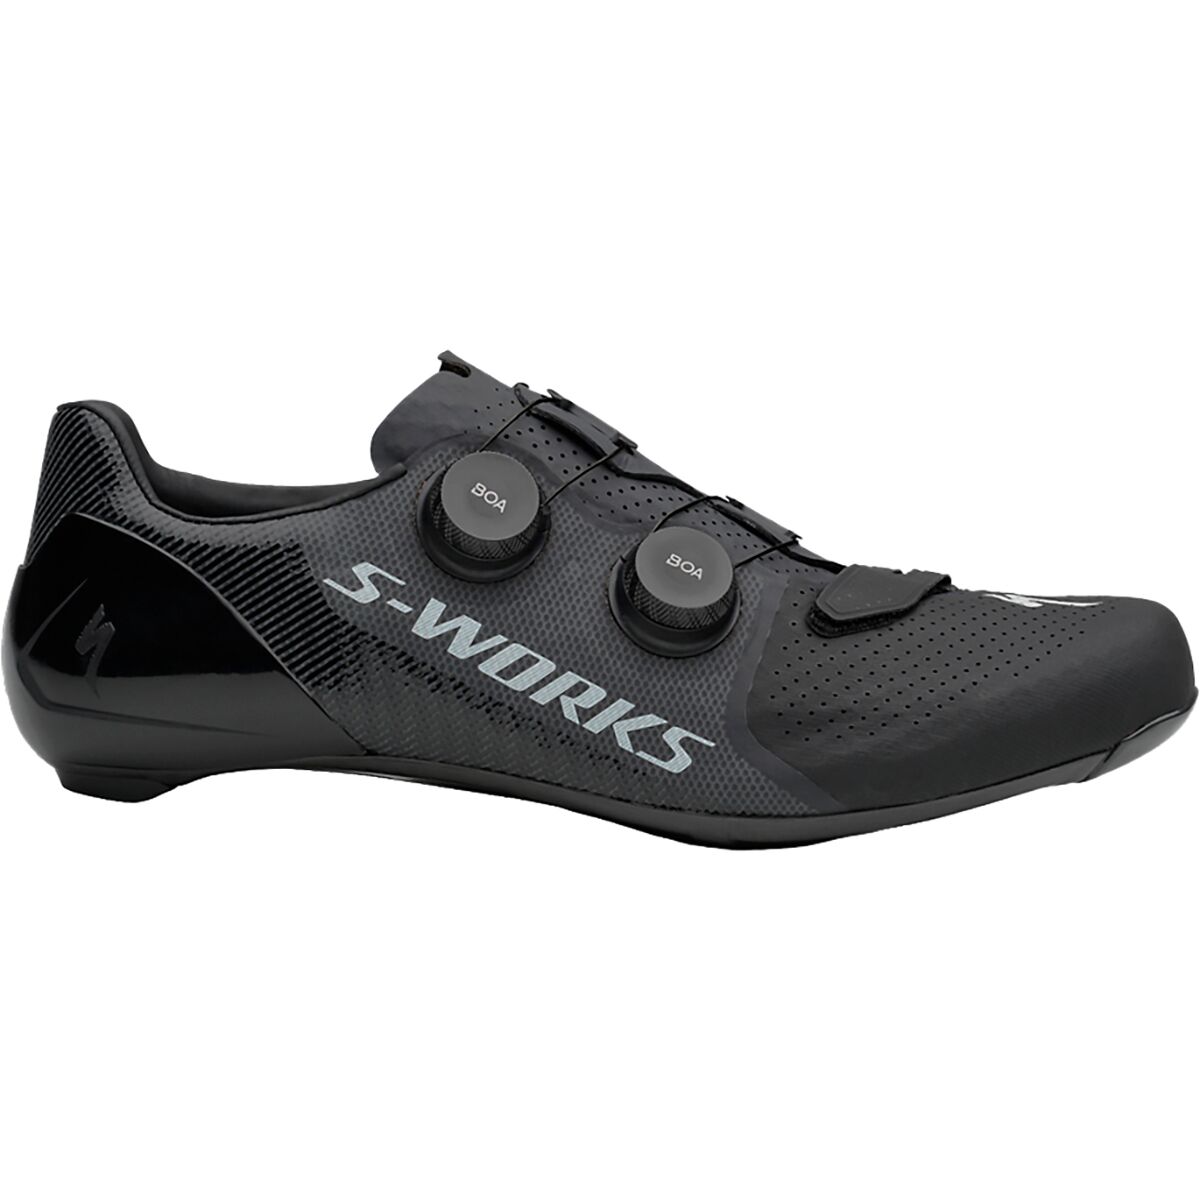 Specialized S-Works 7 Narrow Cycling Shoe